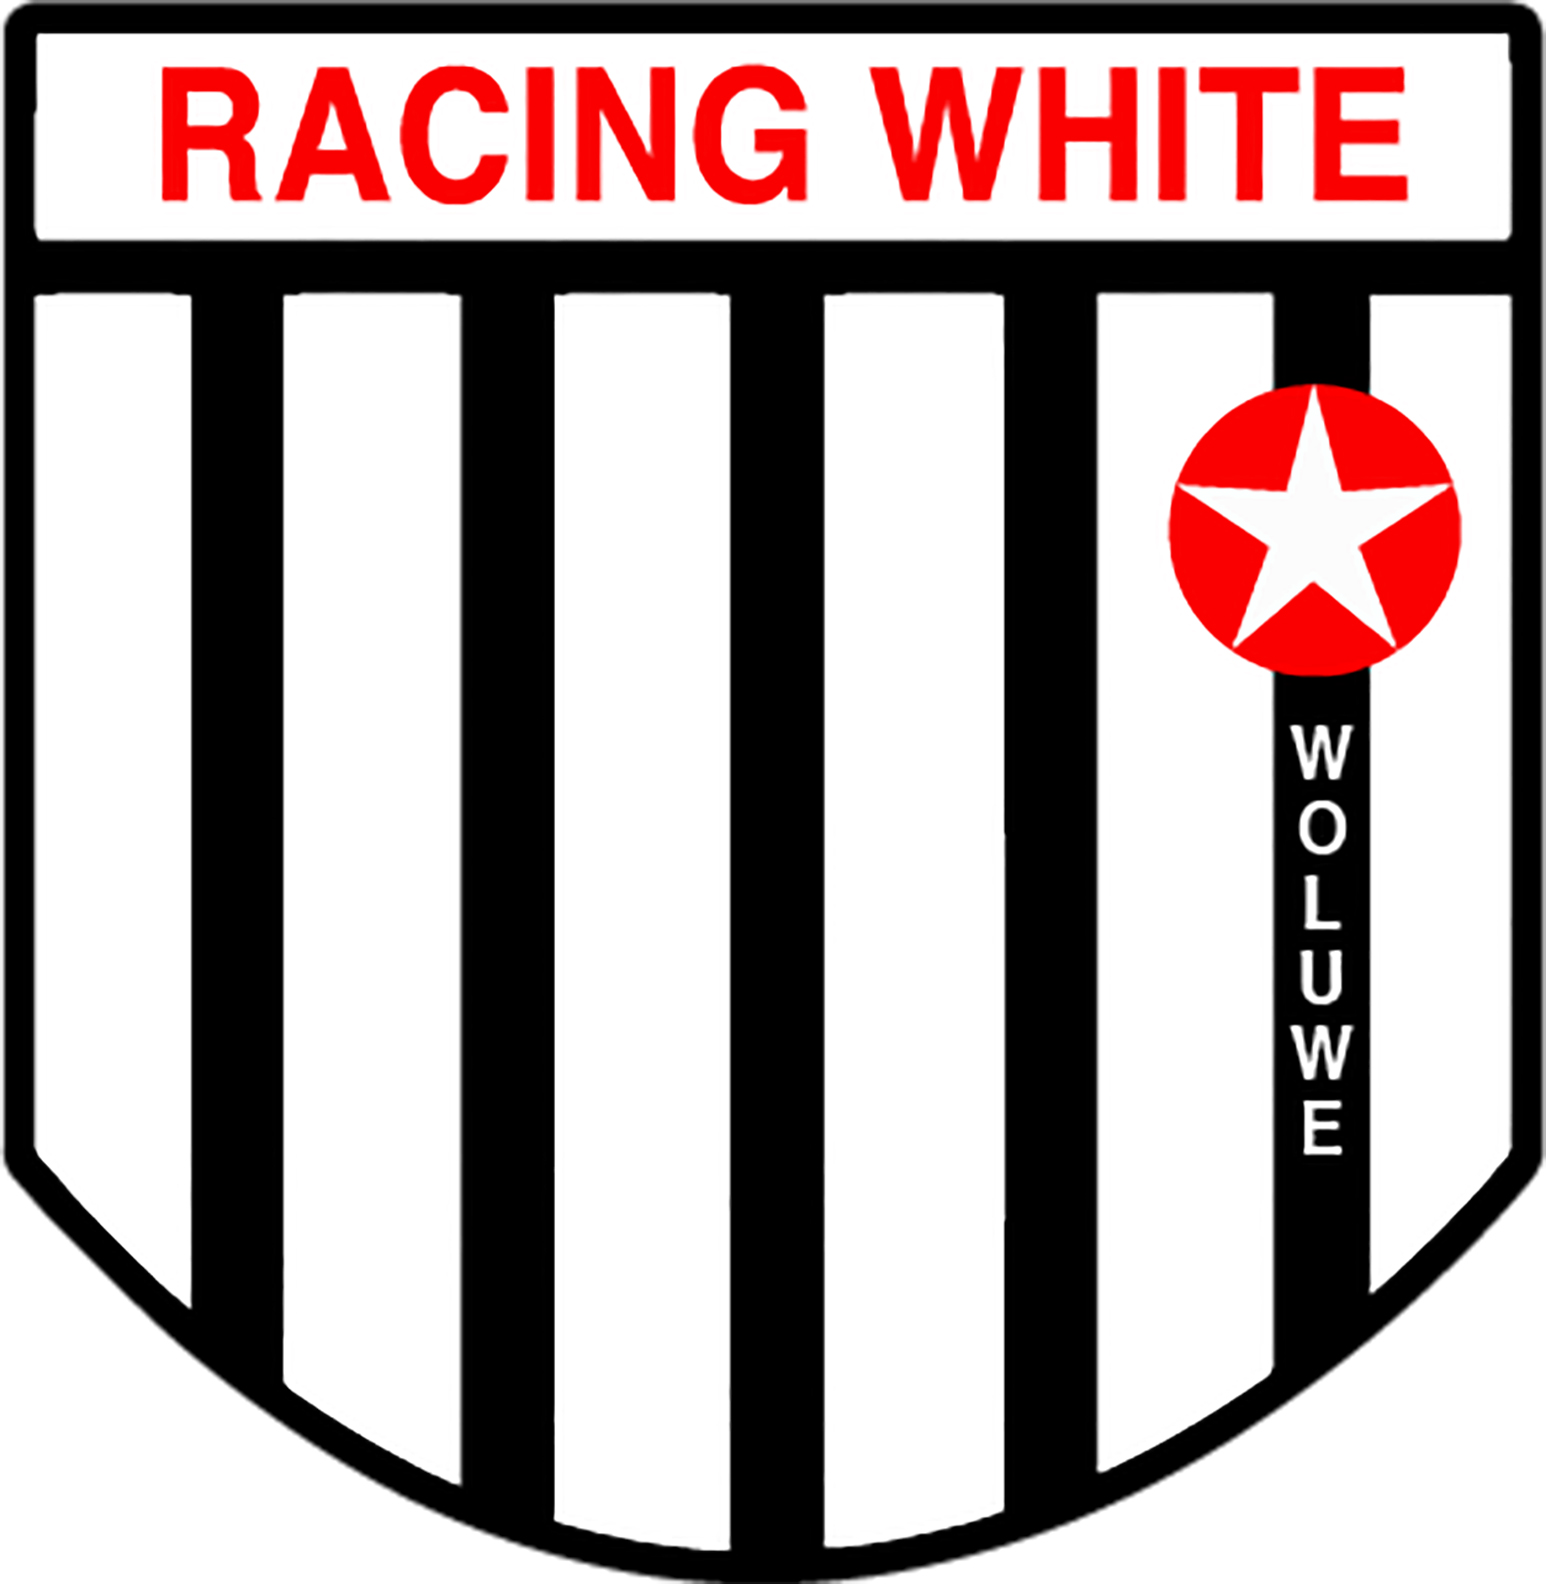 7 - Racing White Woluwe A